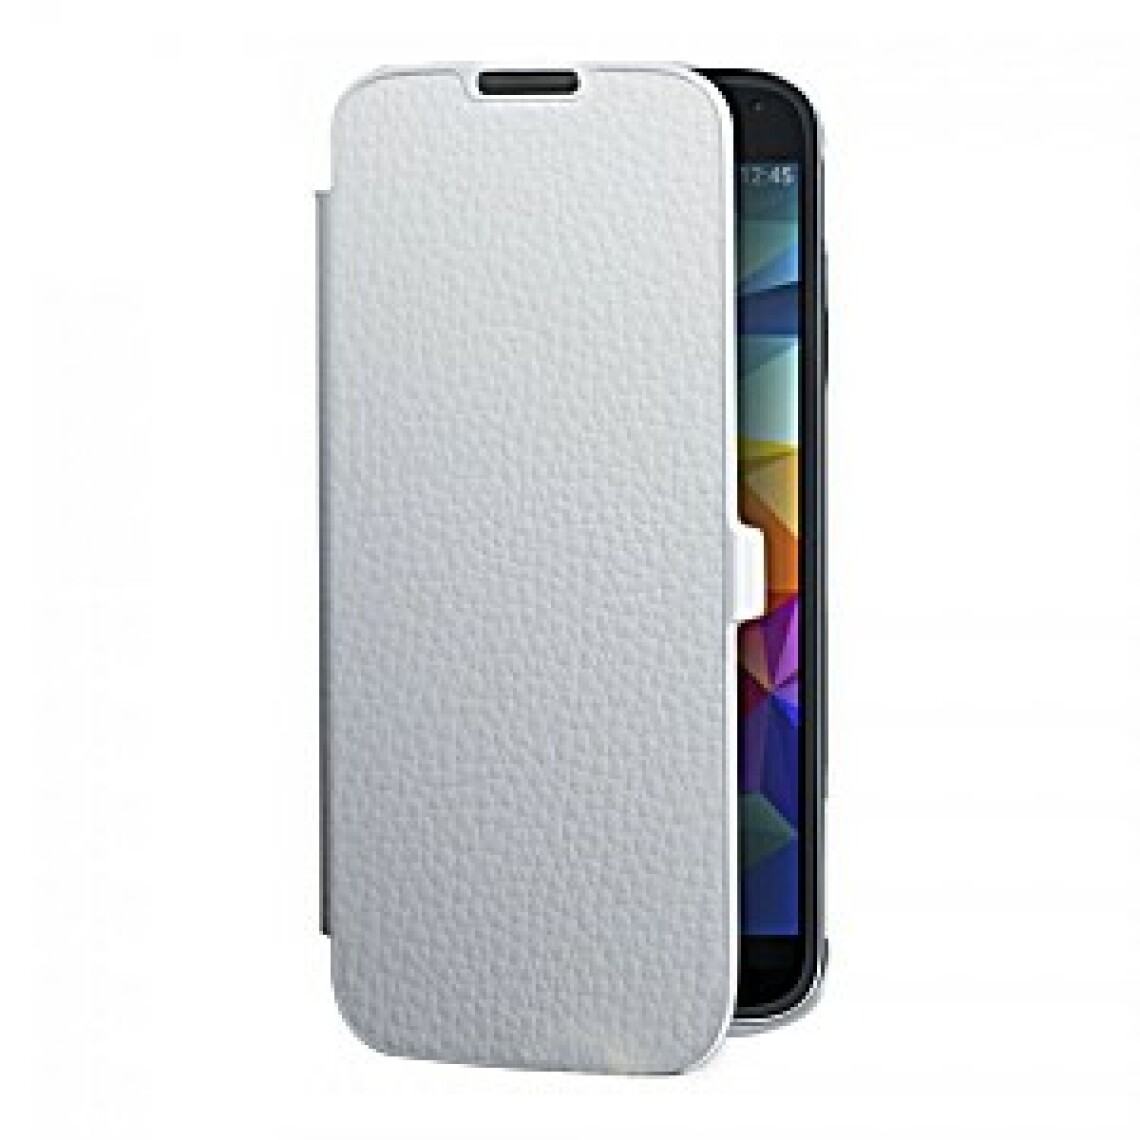 Bigben - Étui coque pour Samsung Galaxy S5 - Blanc - Coque, étui smartphone